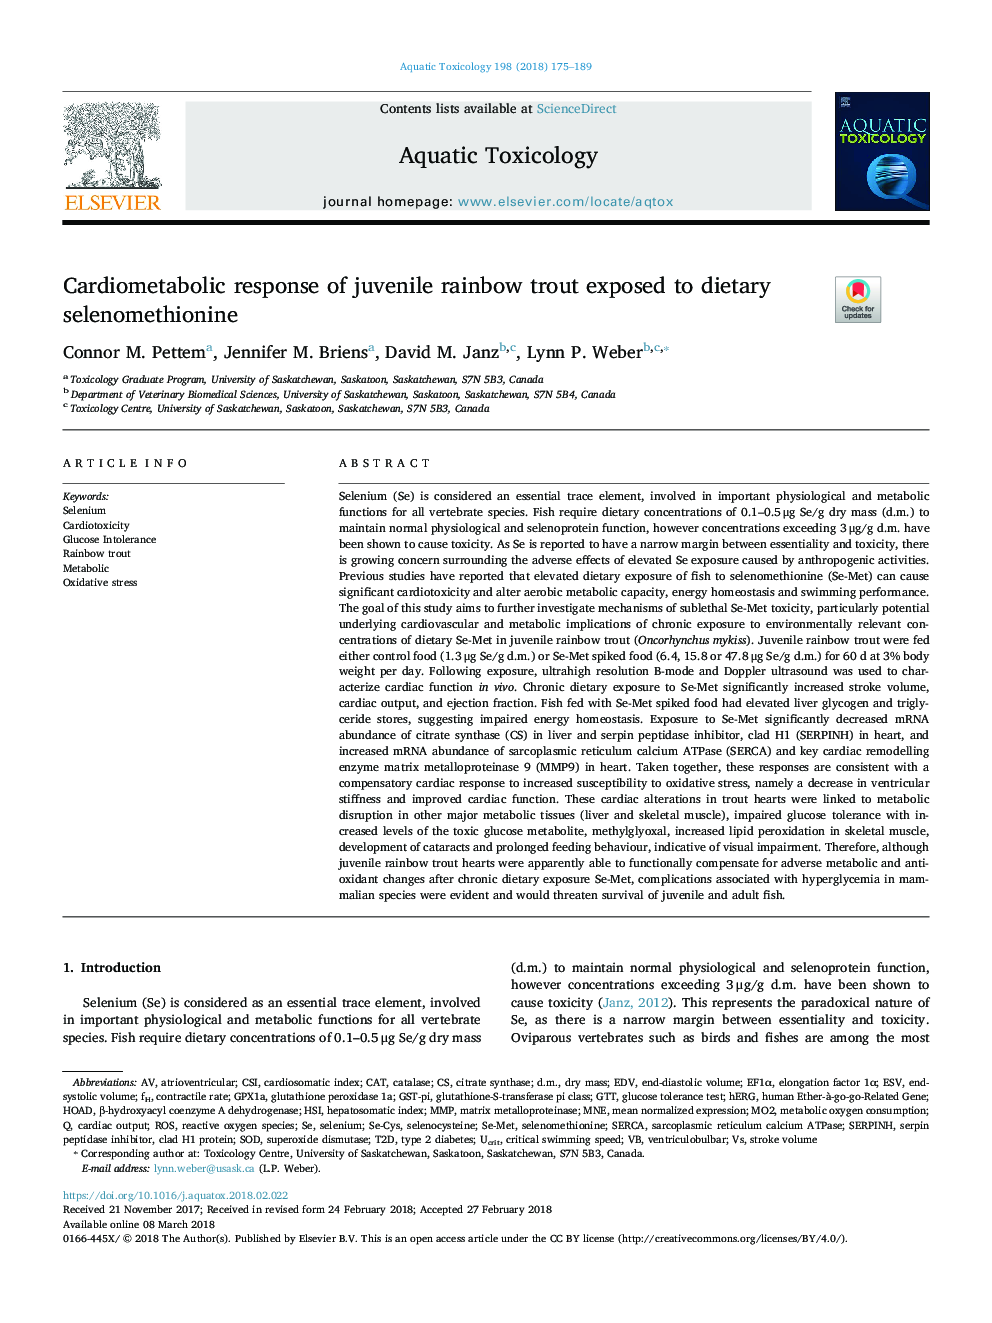 Cardiometabolic response of juvenile rainbow trout exposed to dietary selenomethionine